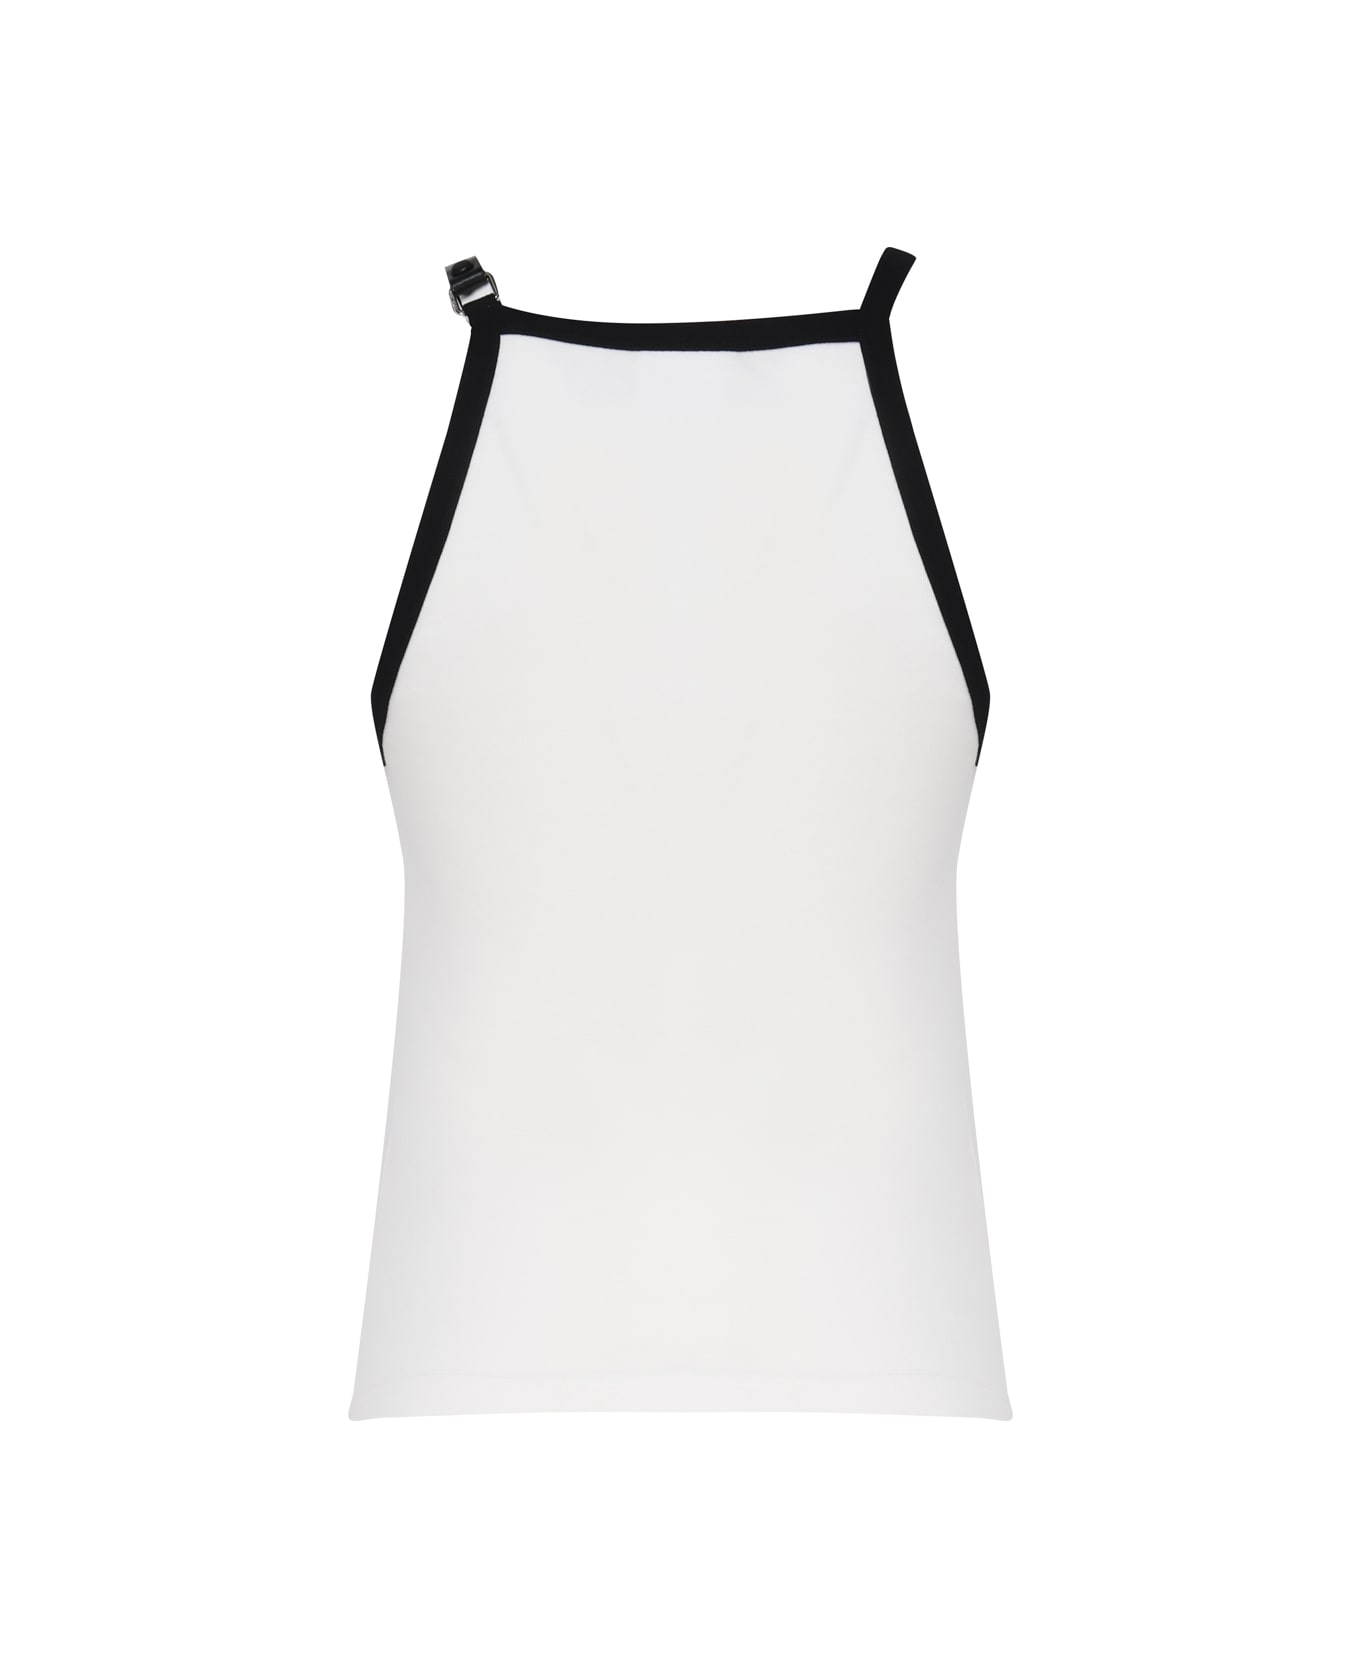 Courrèges Cotton Top With Strap Suspender - BLACK, white タンクトップ